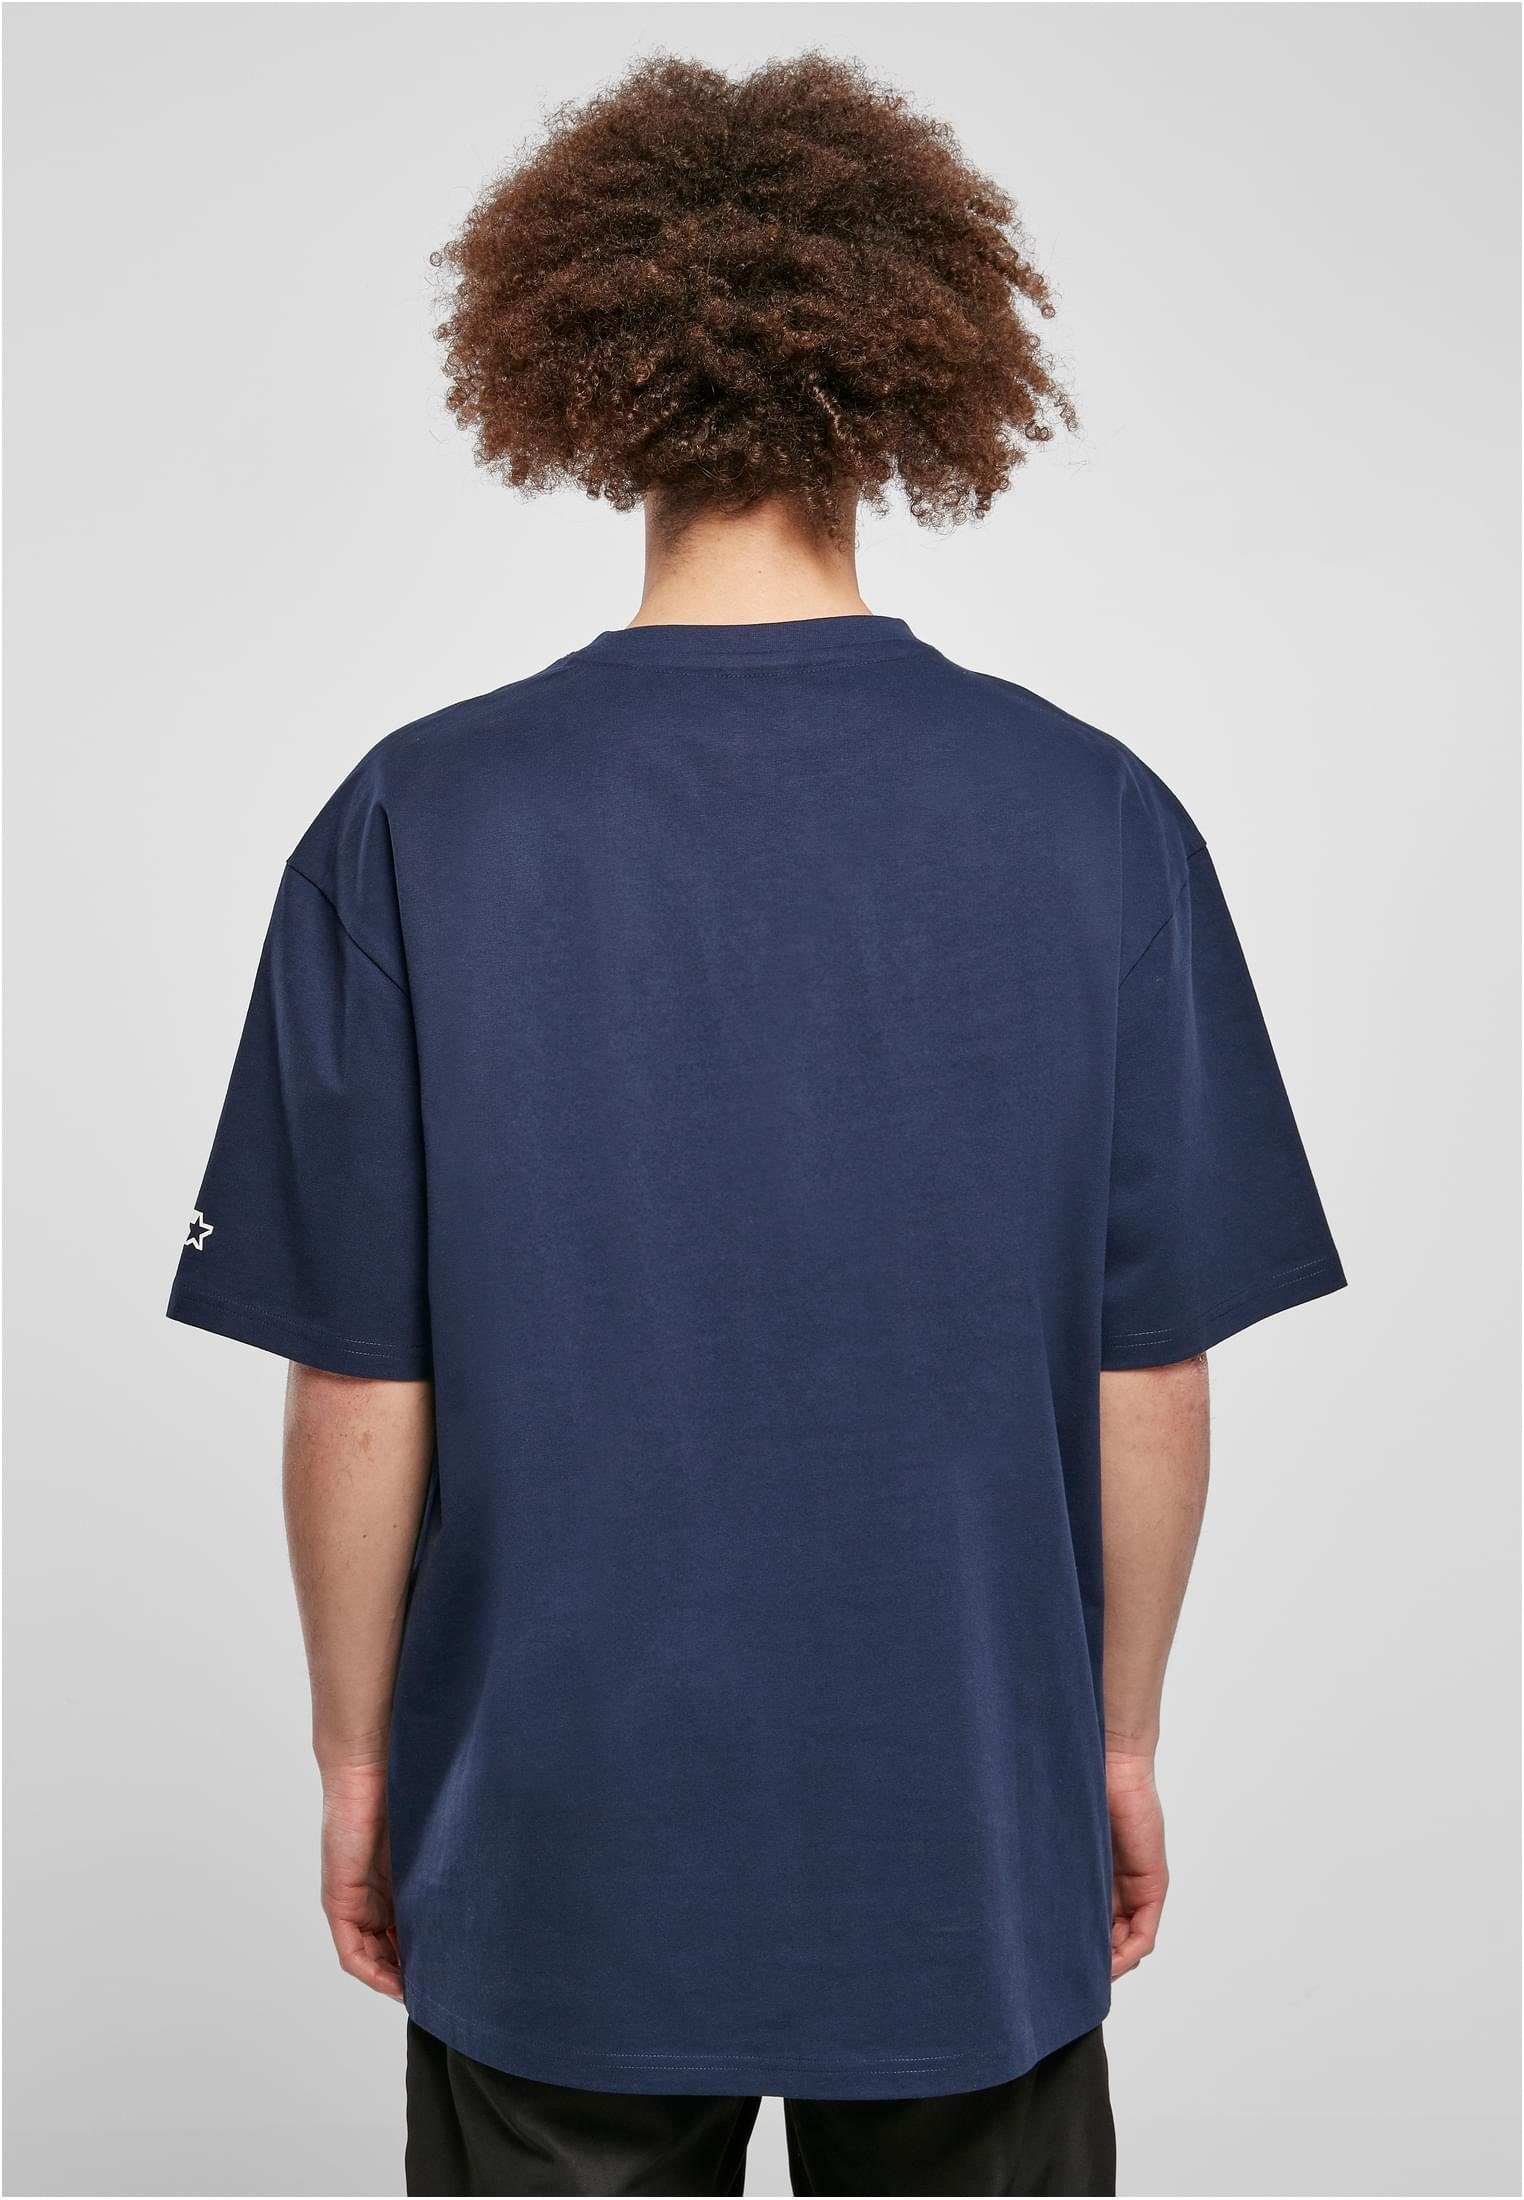 (1-tlg) Label Black Herren Starter darkblue Starter College Tee T-Shirt